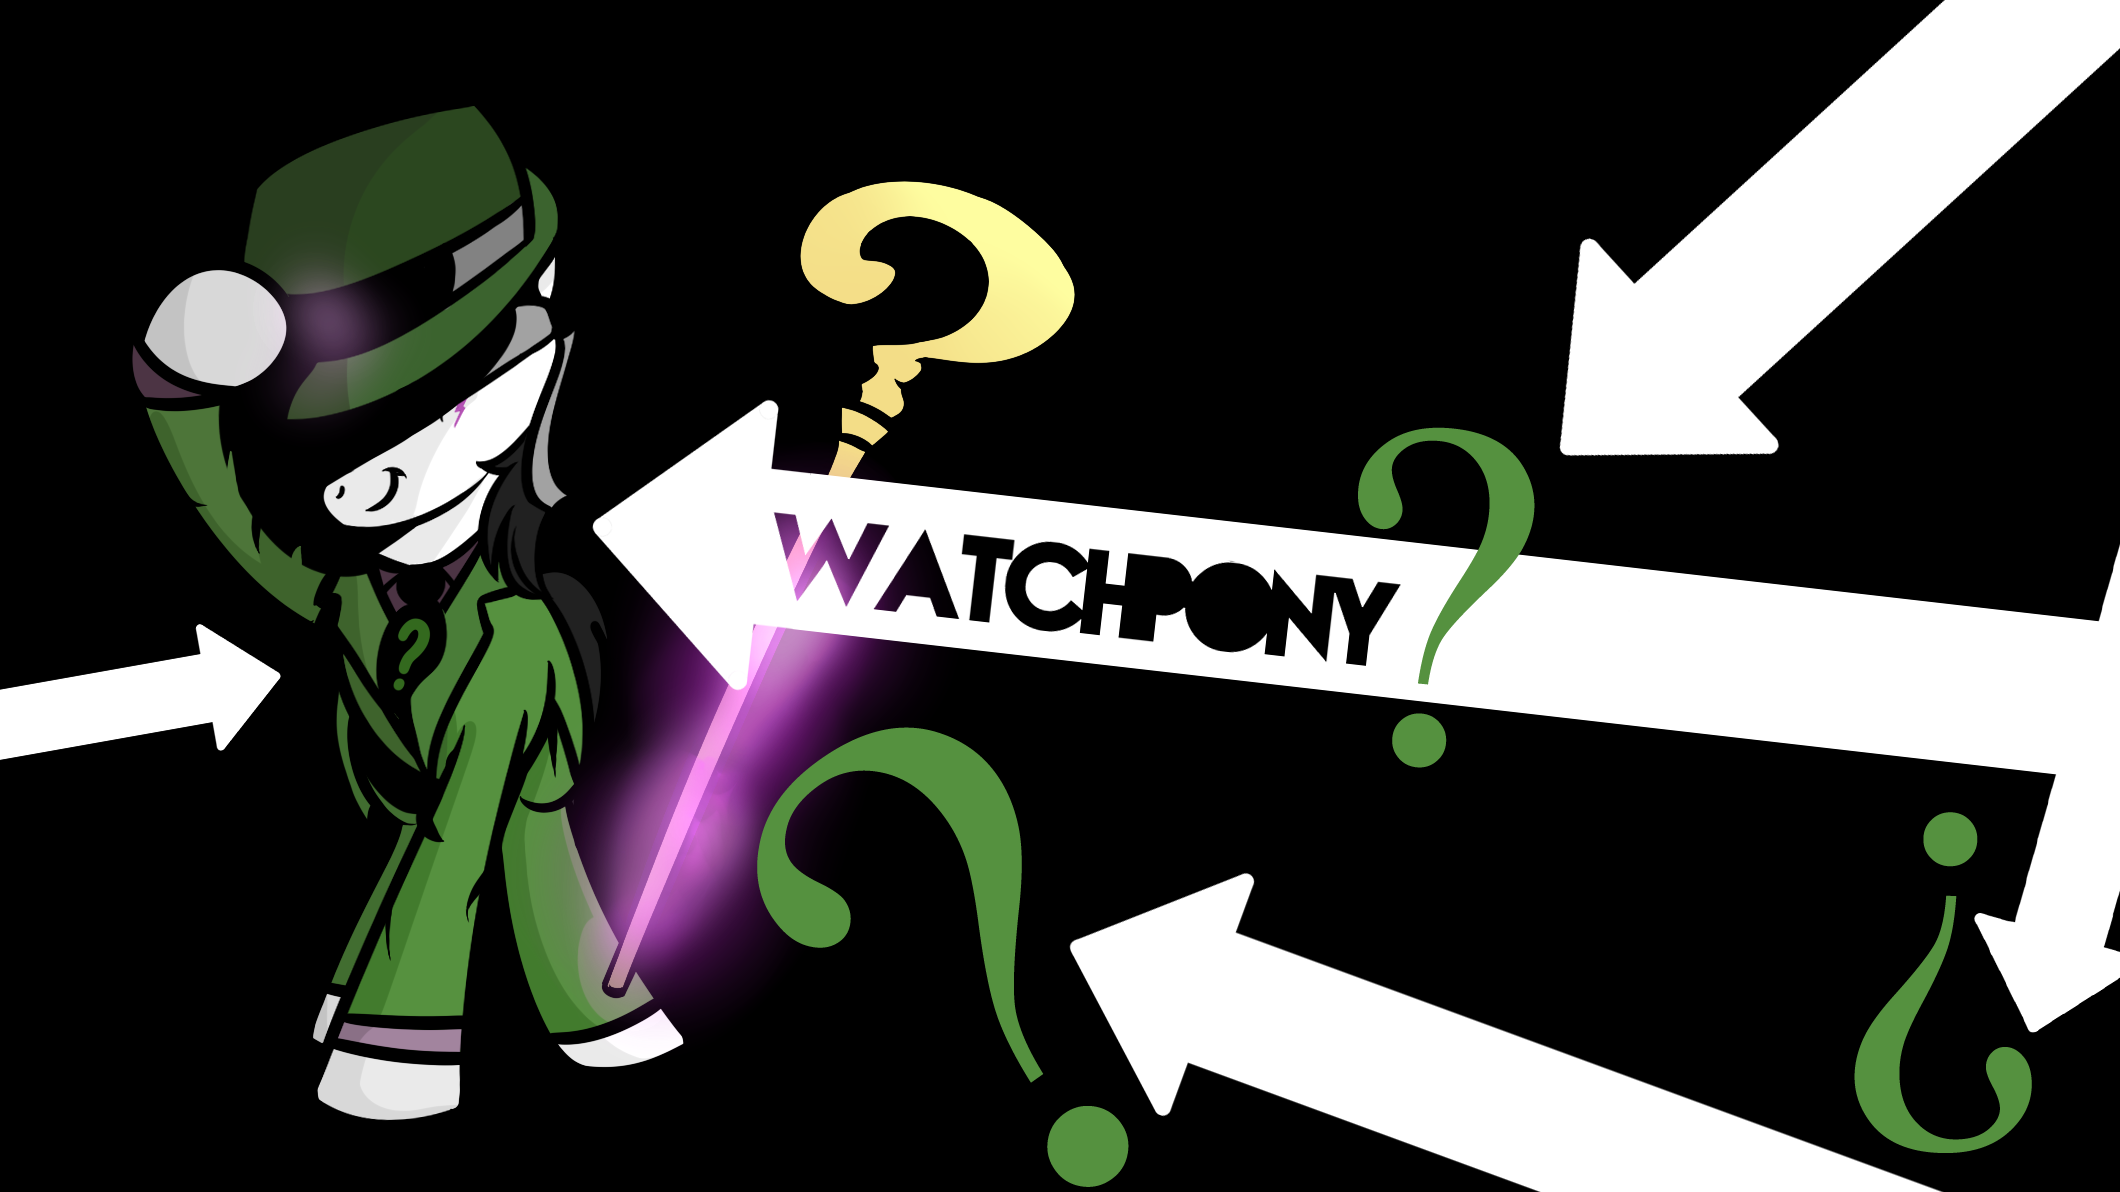 WatchPony